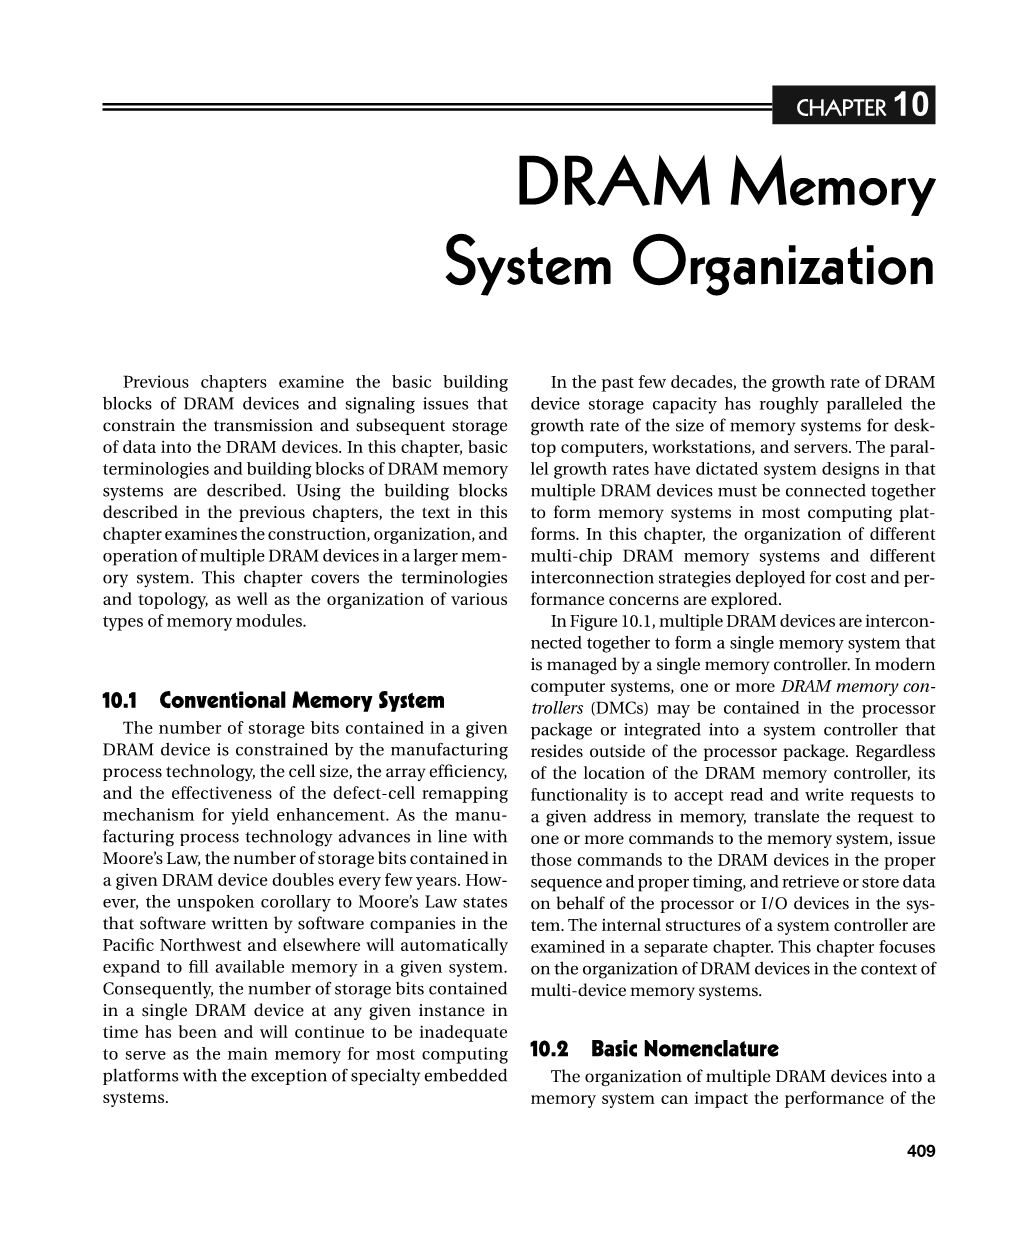 DRAM Memory System Organization